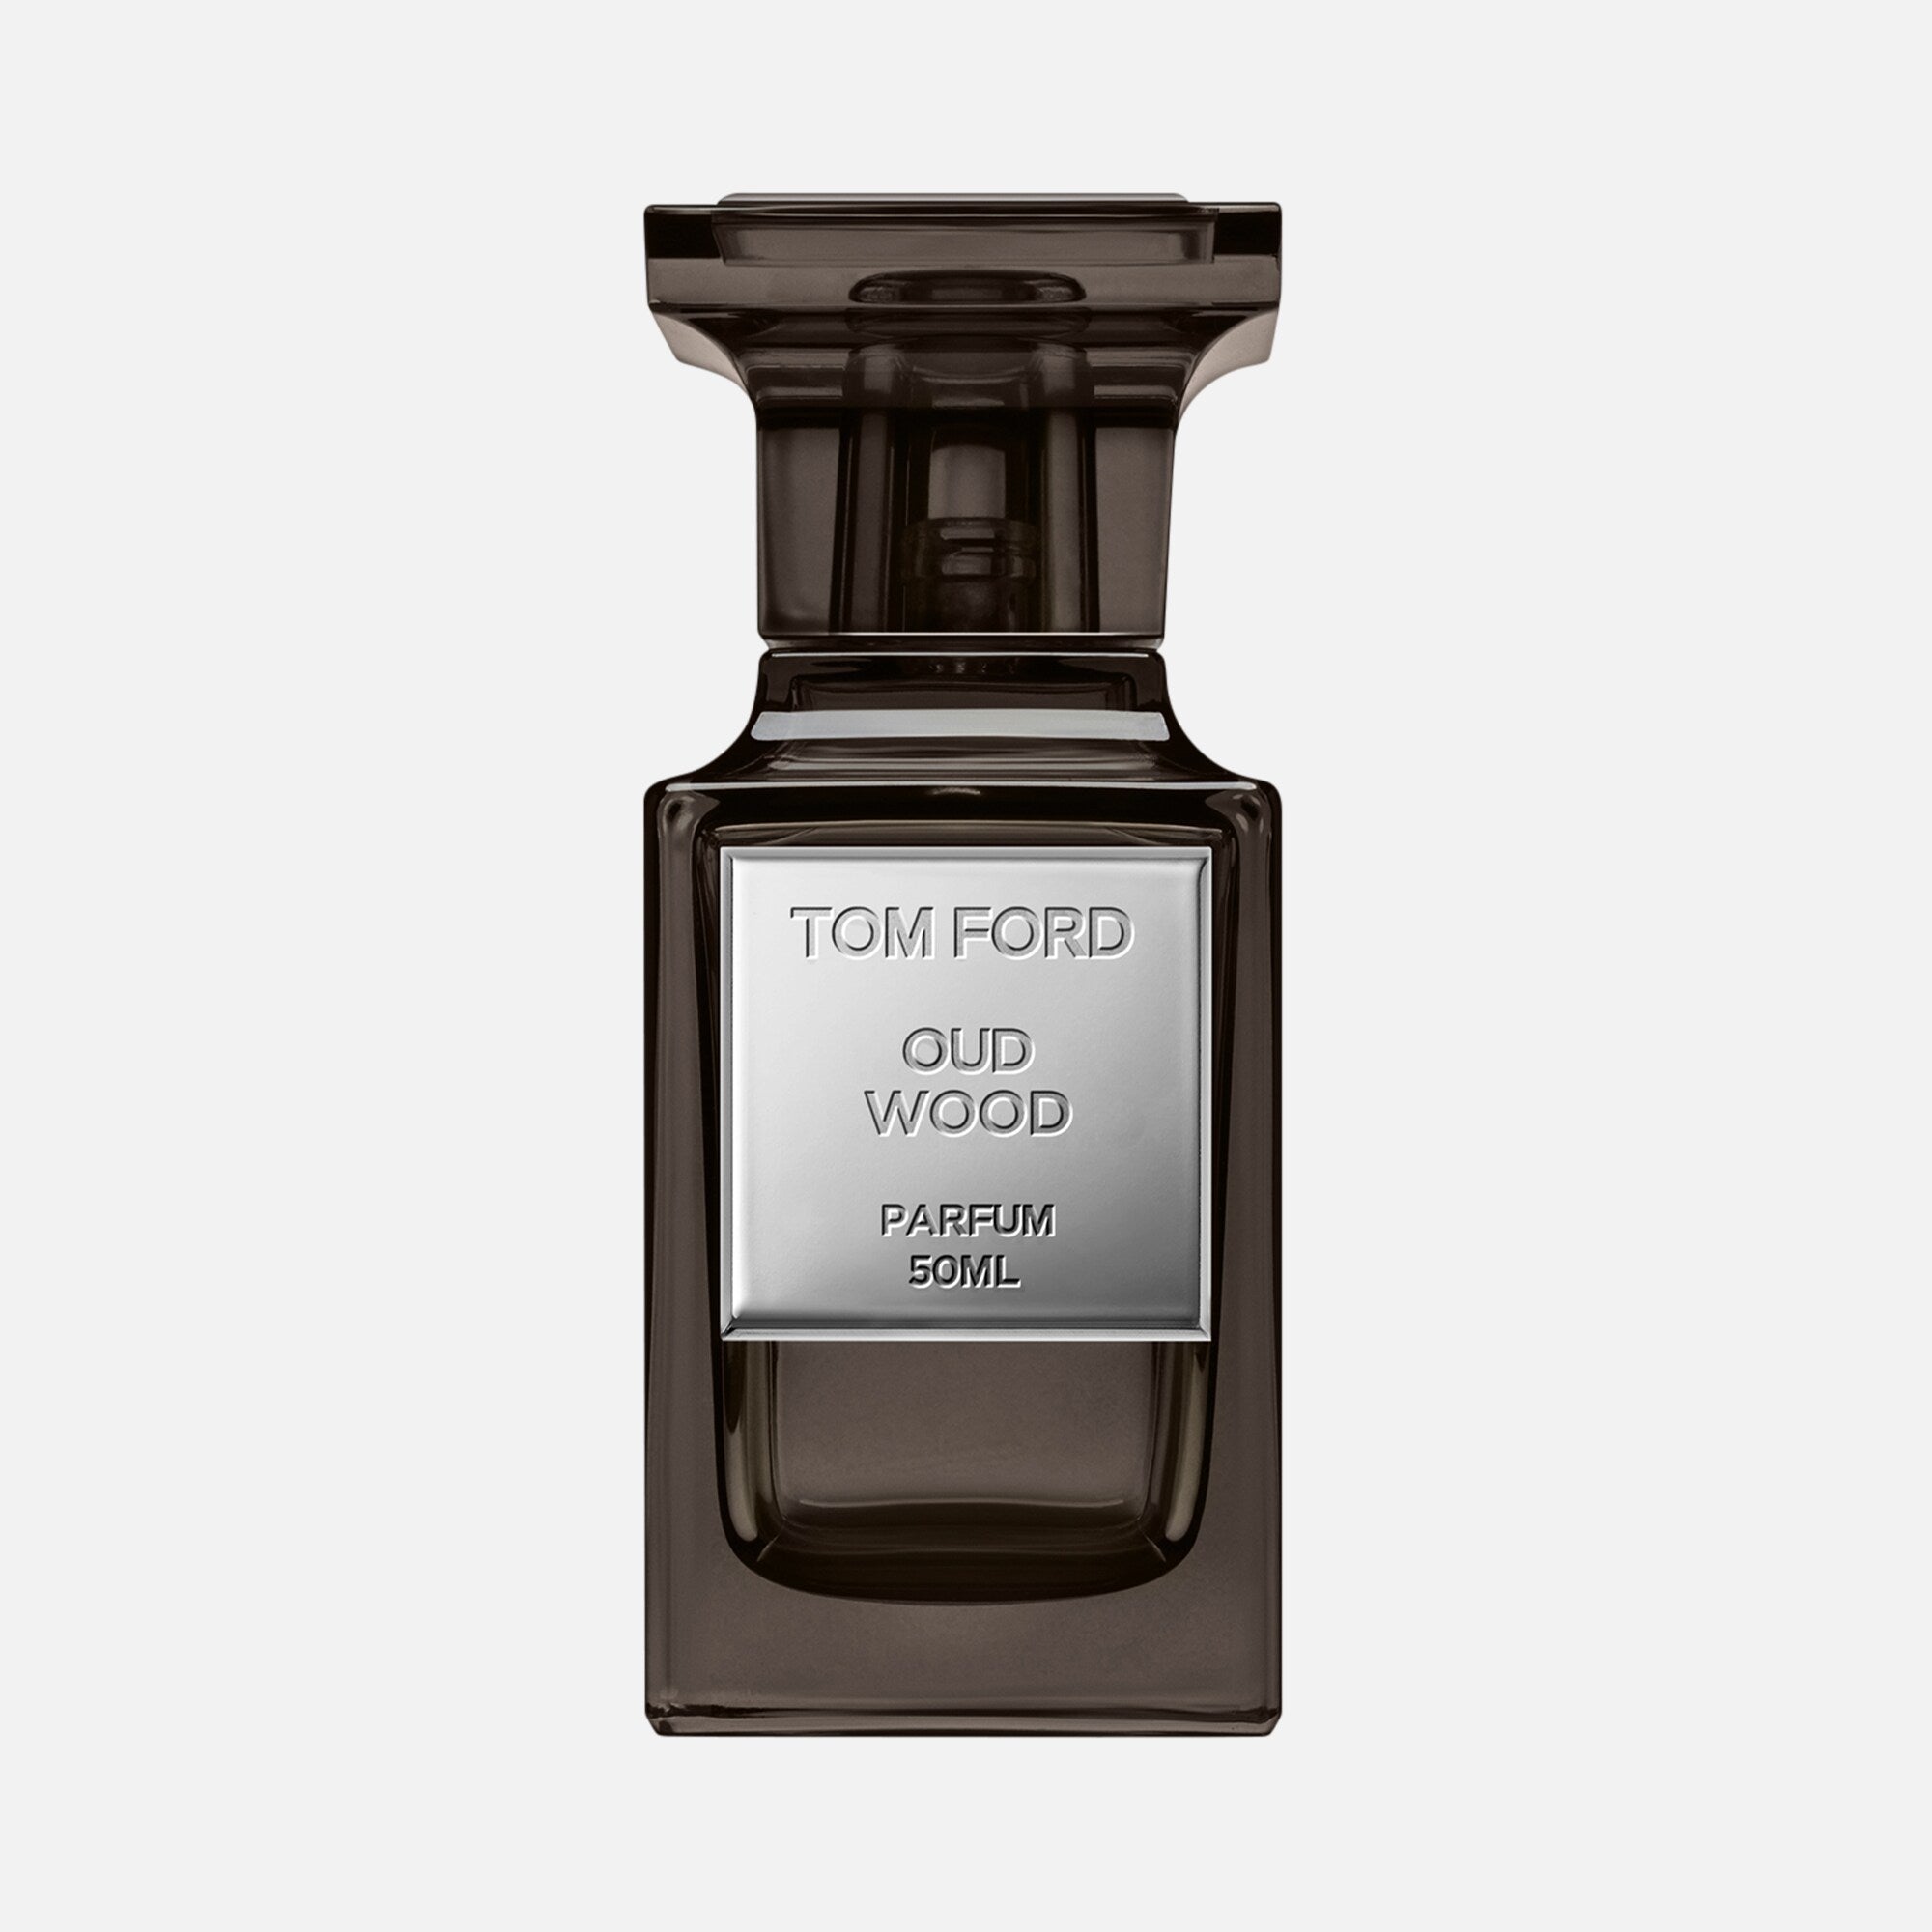 Nước Hoa TOM FORD Oud Wood Parfum #50 mL